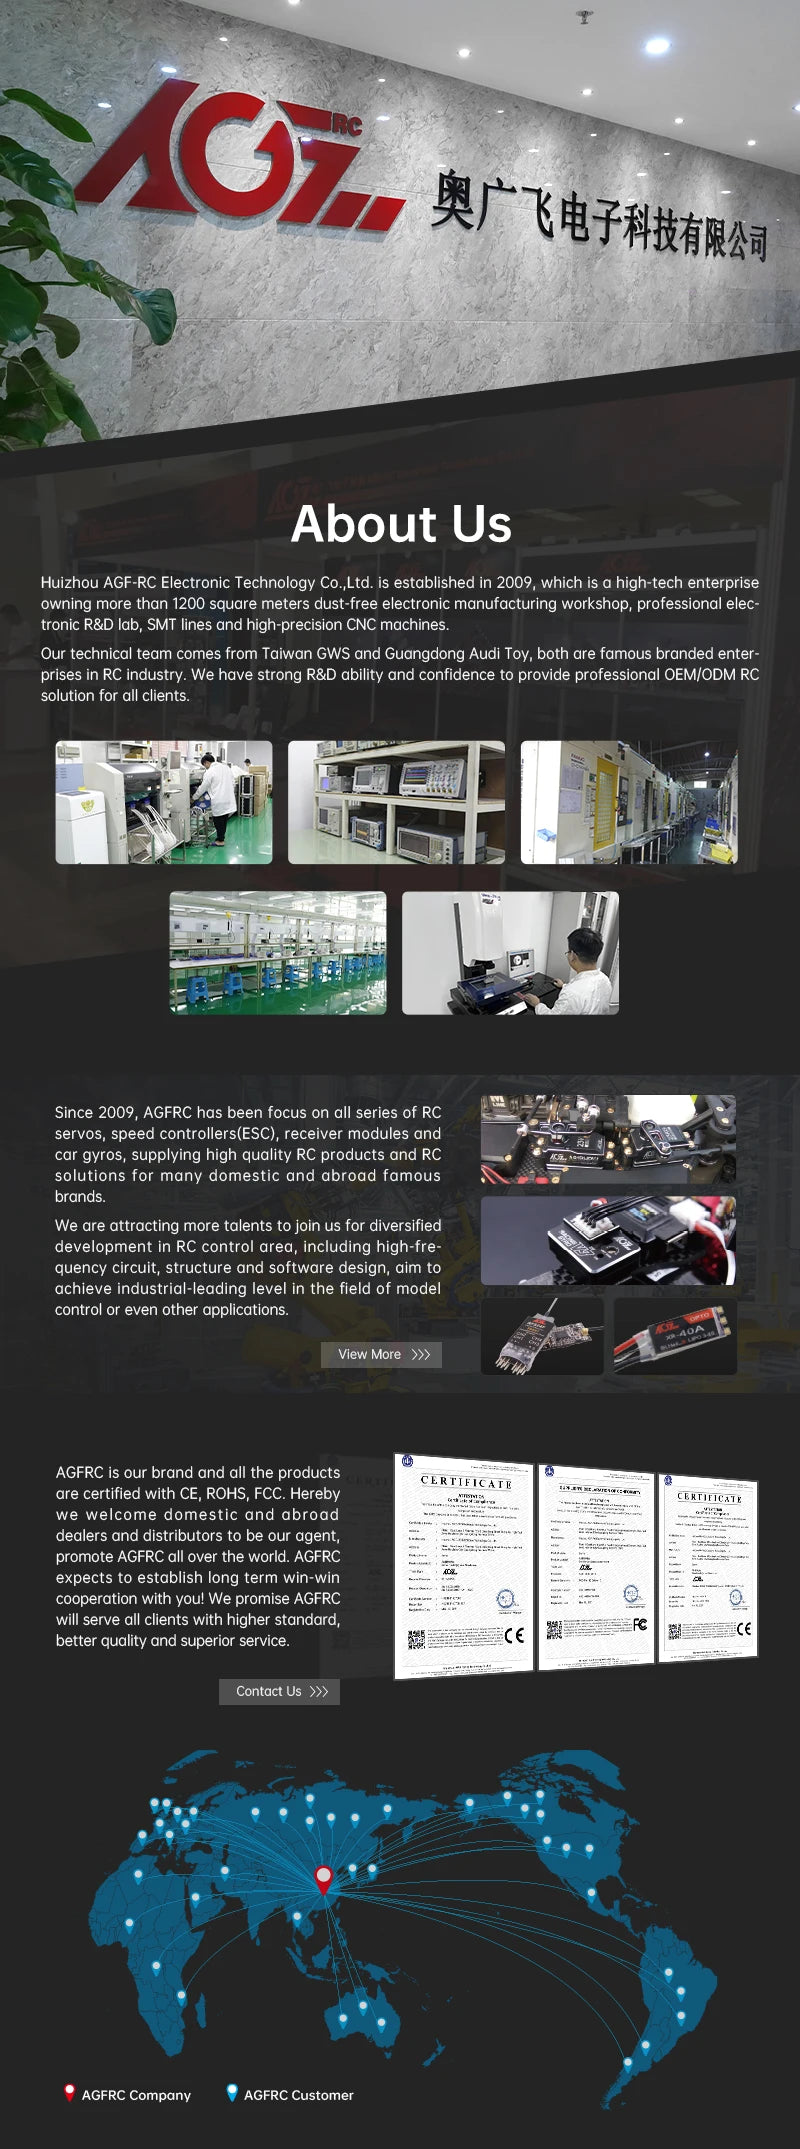 AGFRC A06CLS V2, Huizhou AGF-RC Electronic Technology Ltd is a high-tech enterprise .